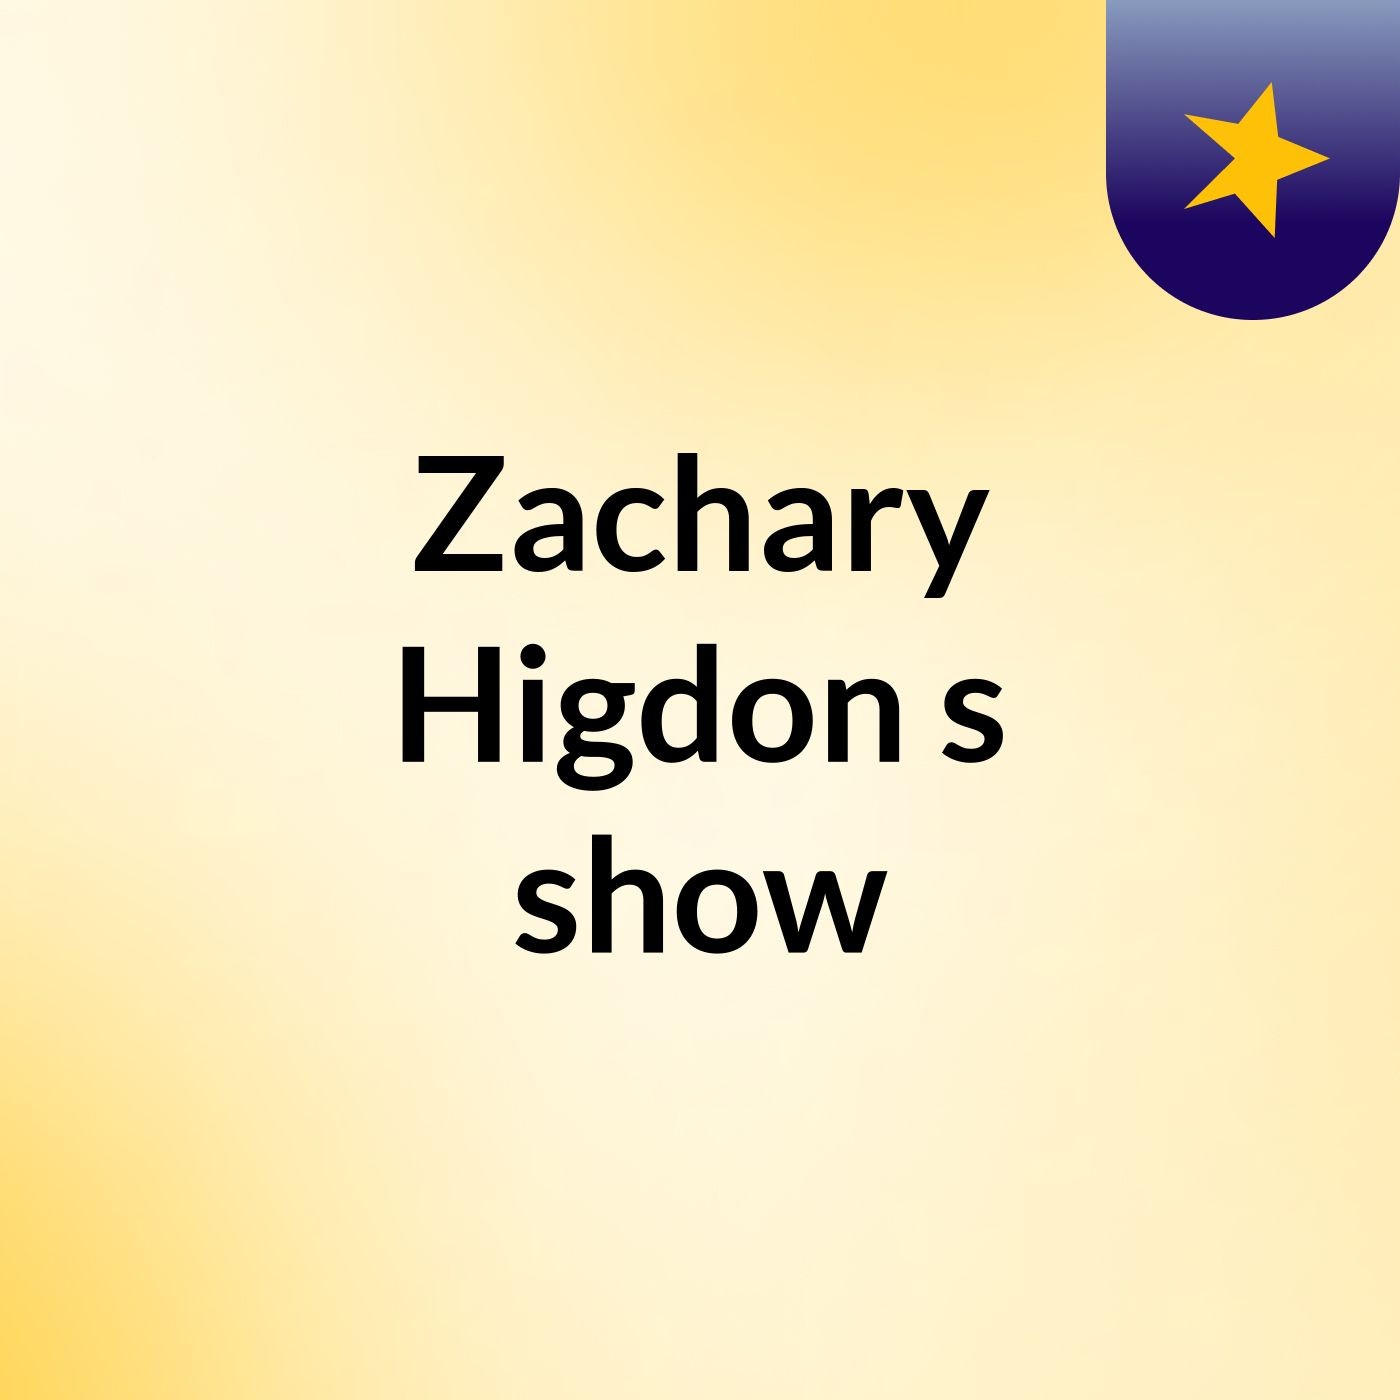 Zachary Higdon's show